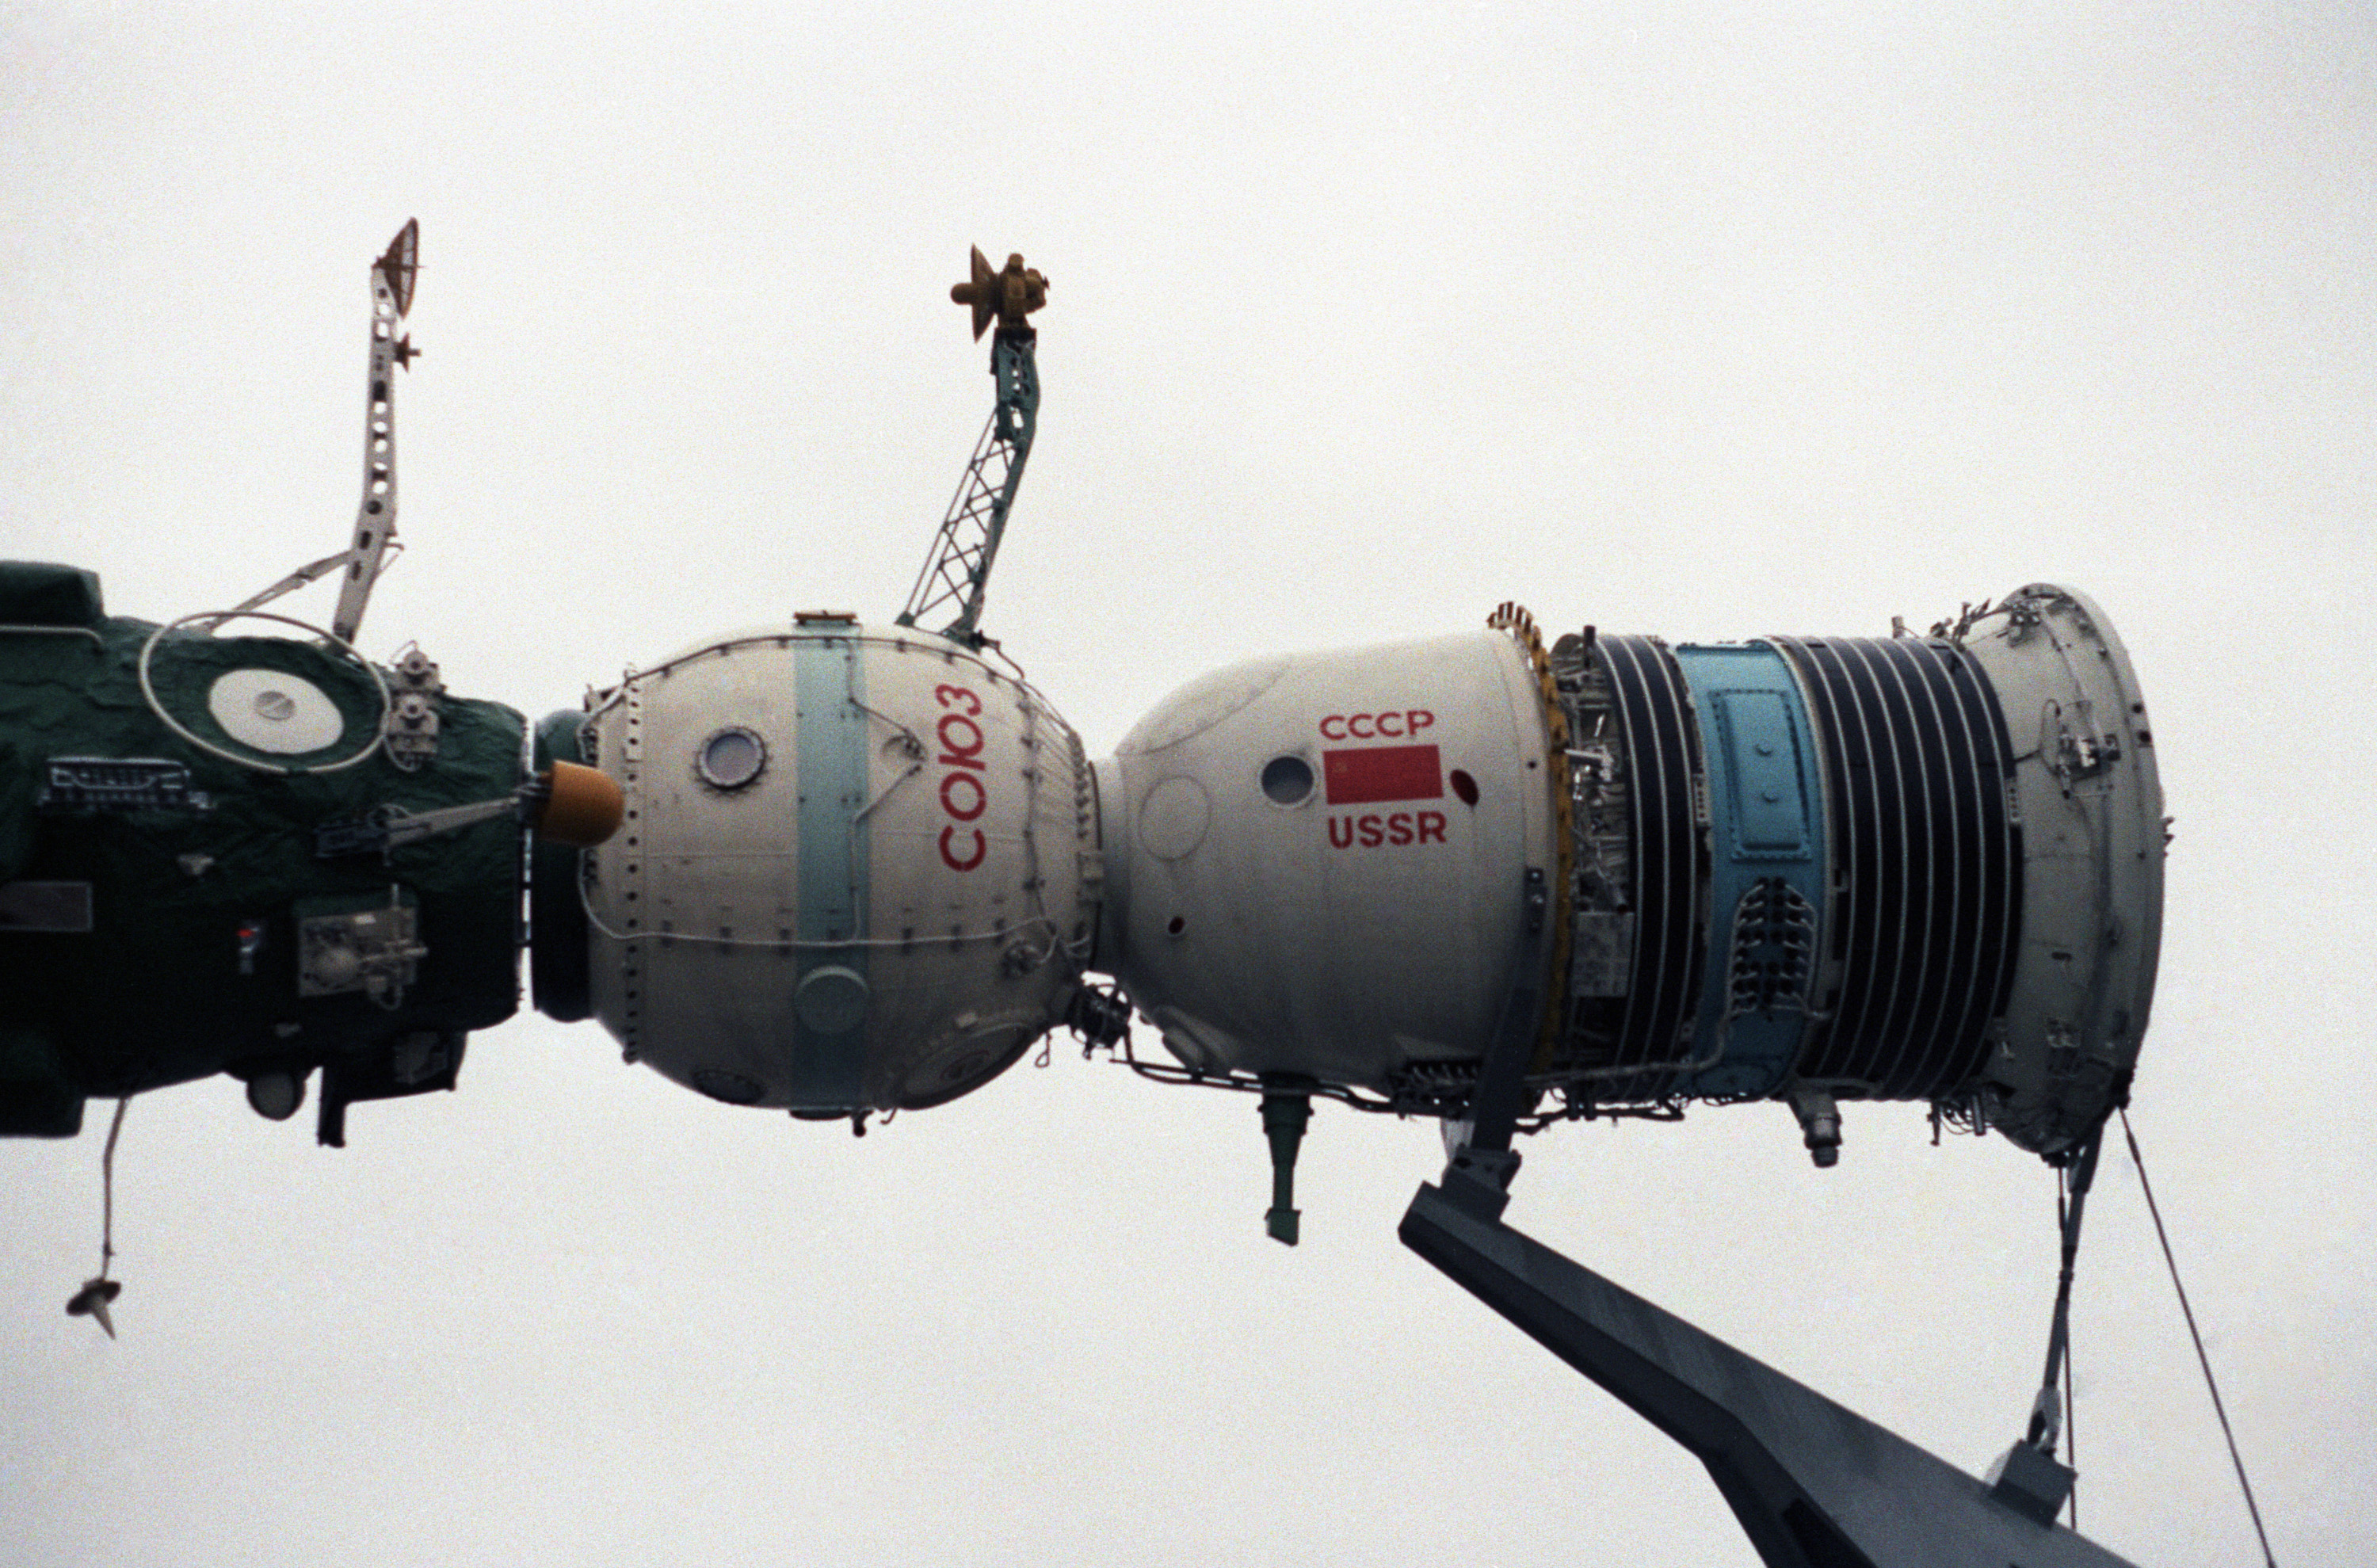 Model of a Soyuz spacecraft, 1985